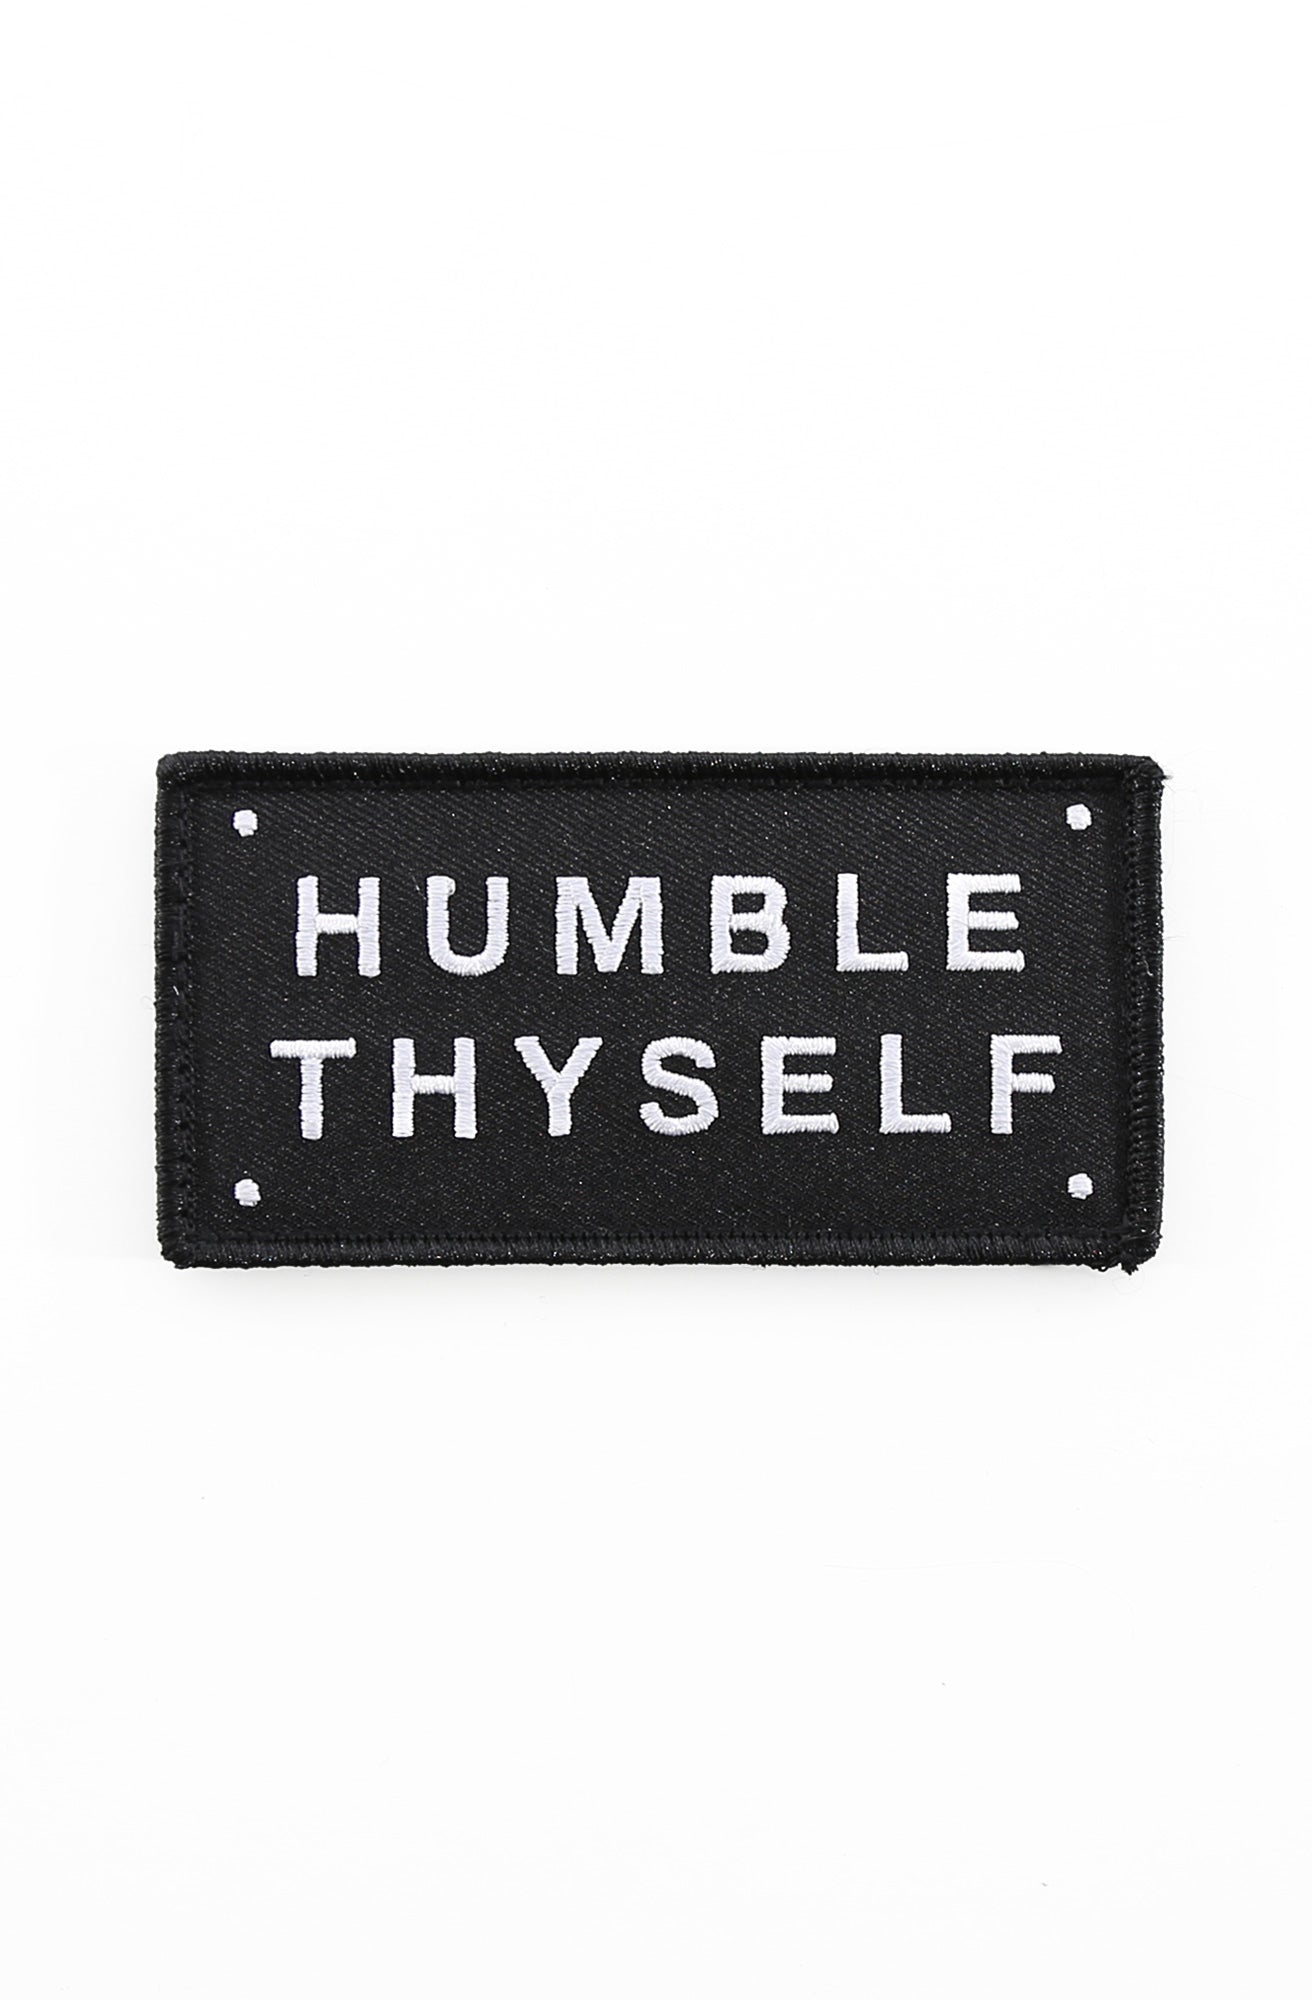 Humble Thyself (Velcro Patch 2" x 4")